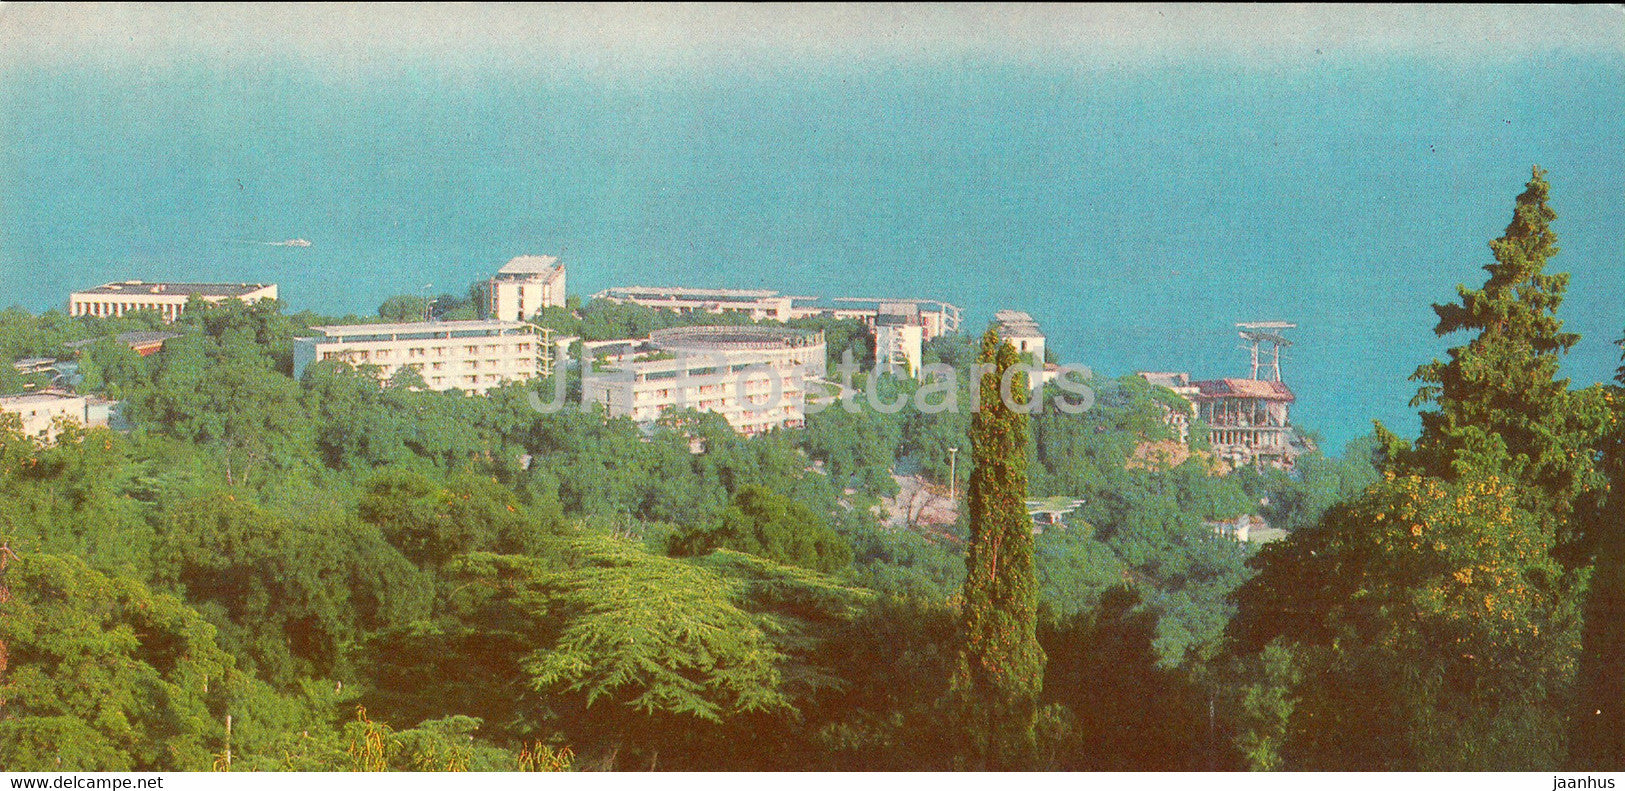 Yalta - pension home Donbass in Massandra - Crimea - 1982 - Ukraine USSR - unused - JH Postcards